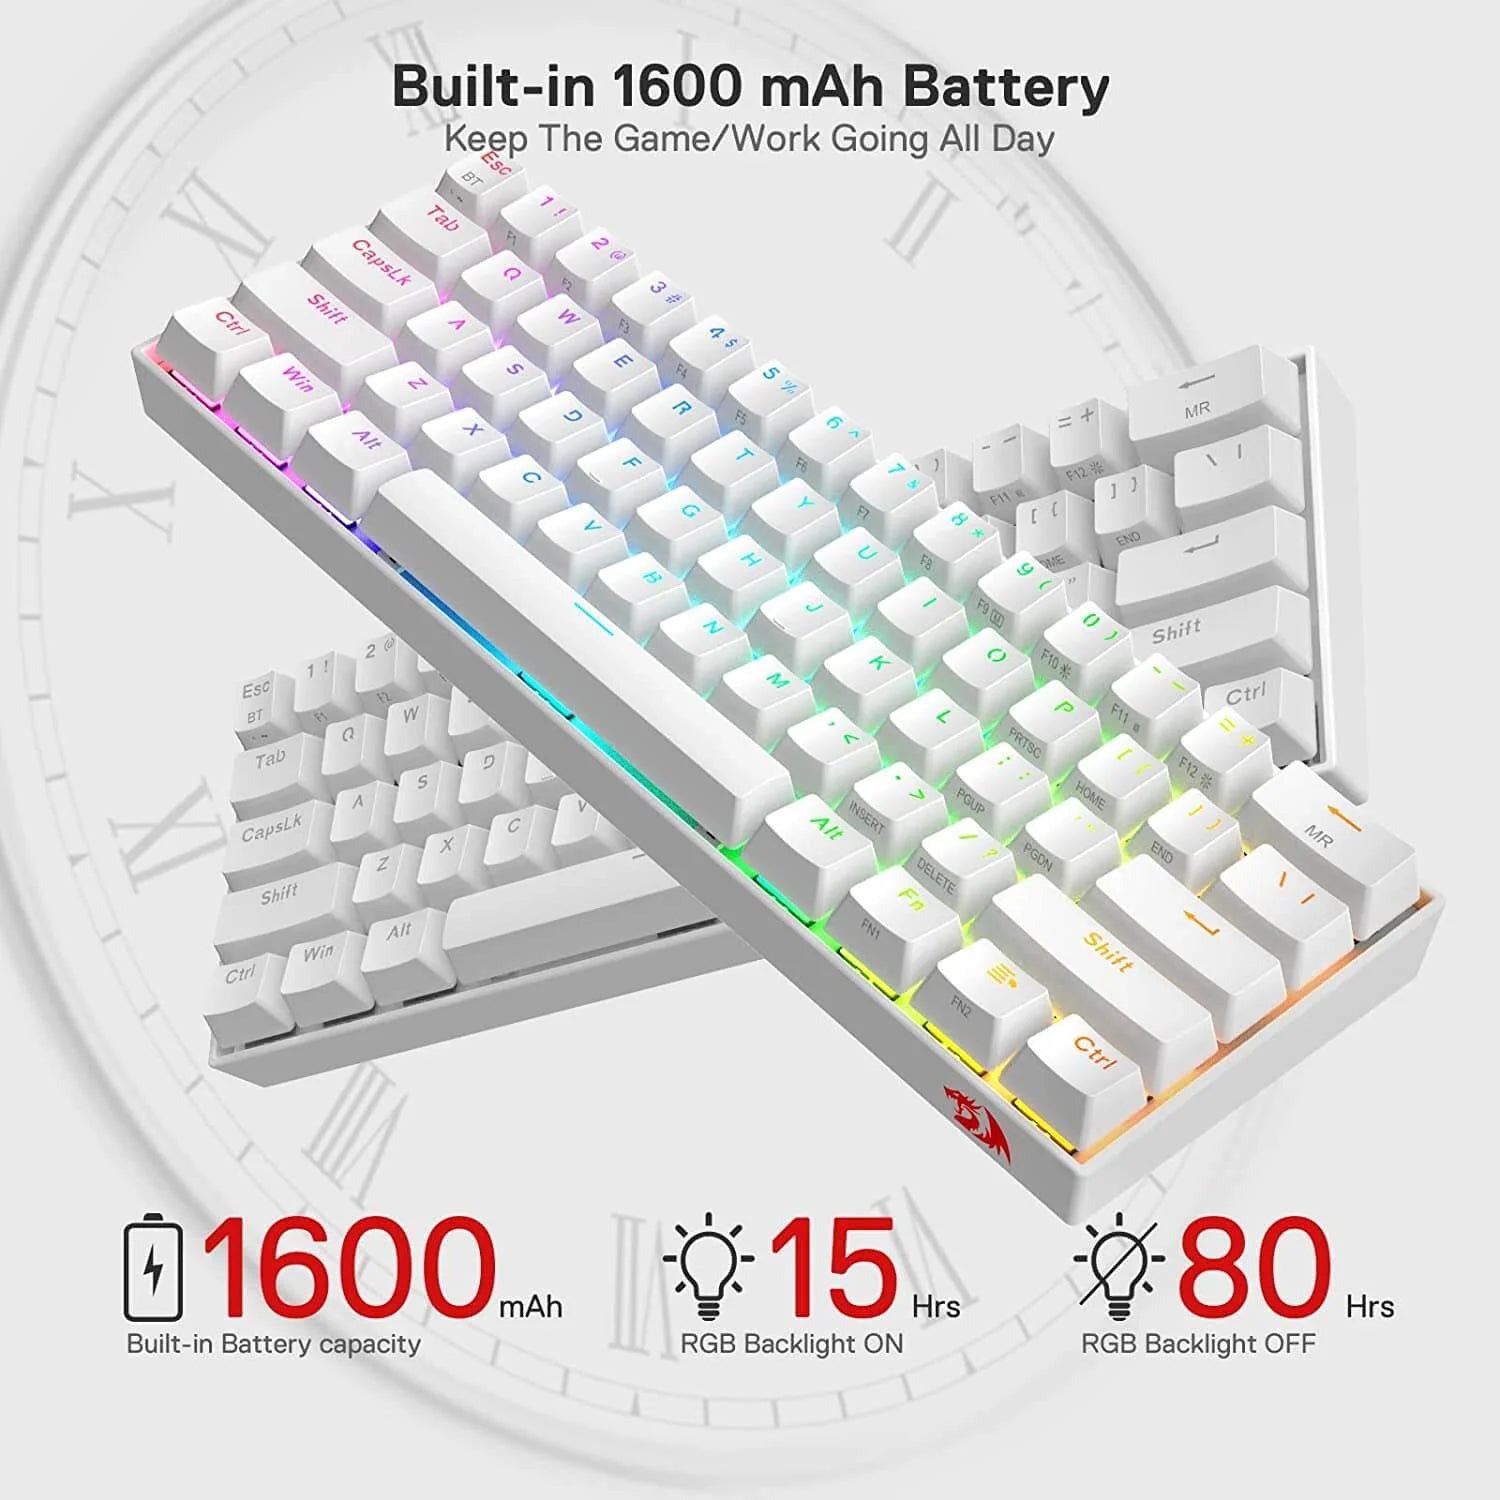 Redragon K530 PRO Draconic 60% Compact RGB Wireless Keyboard - White